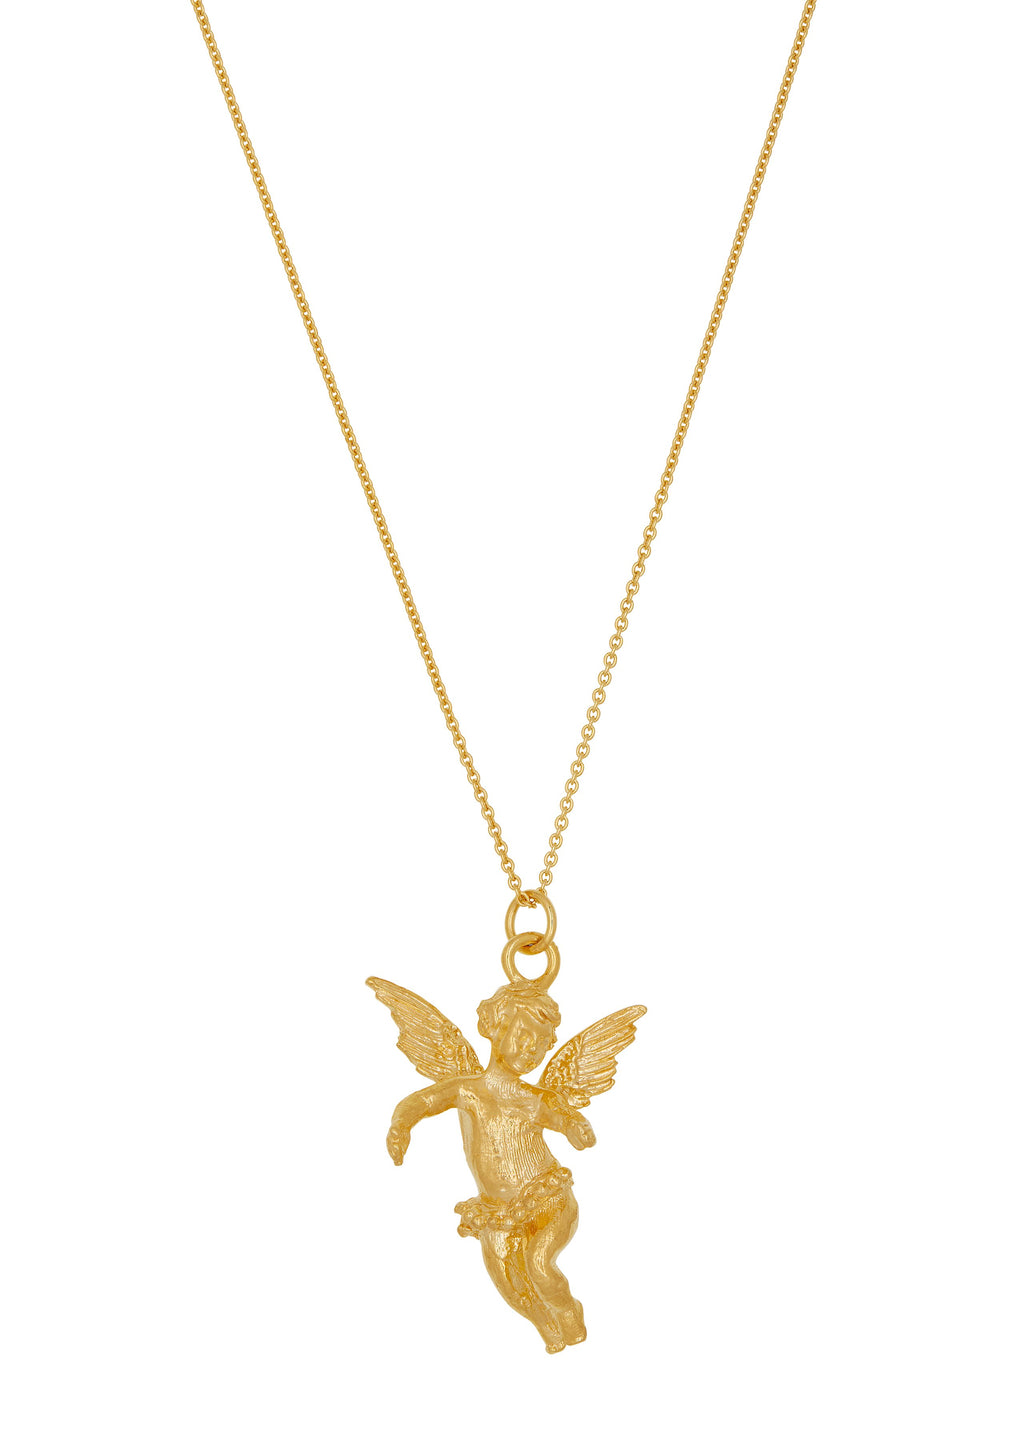 Charm Necklace Chain Gold | Rebekah Price